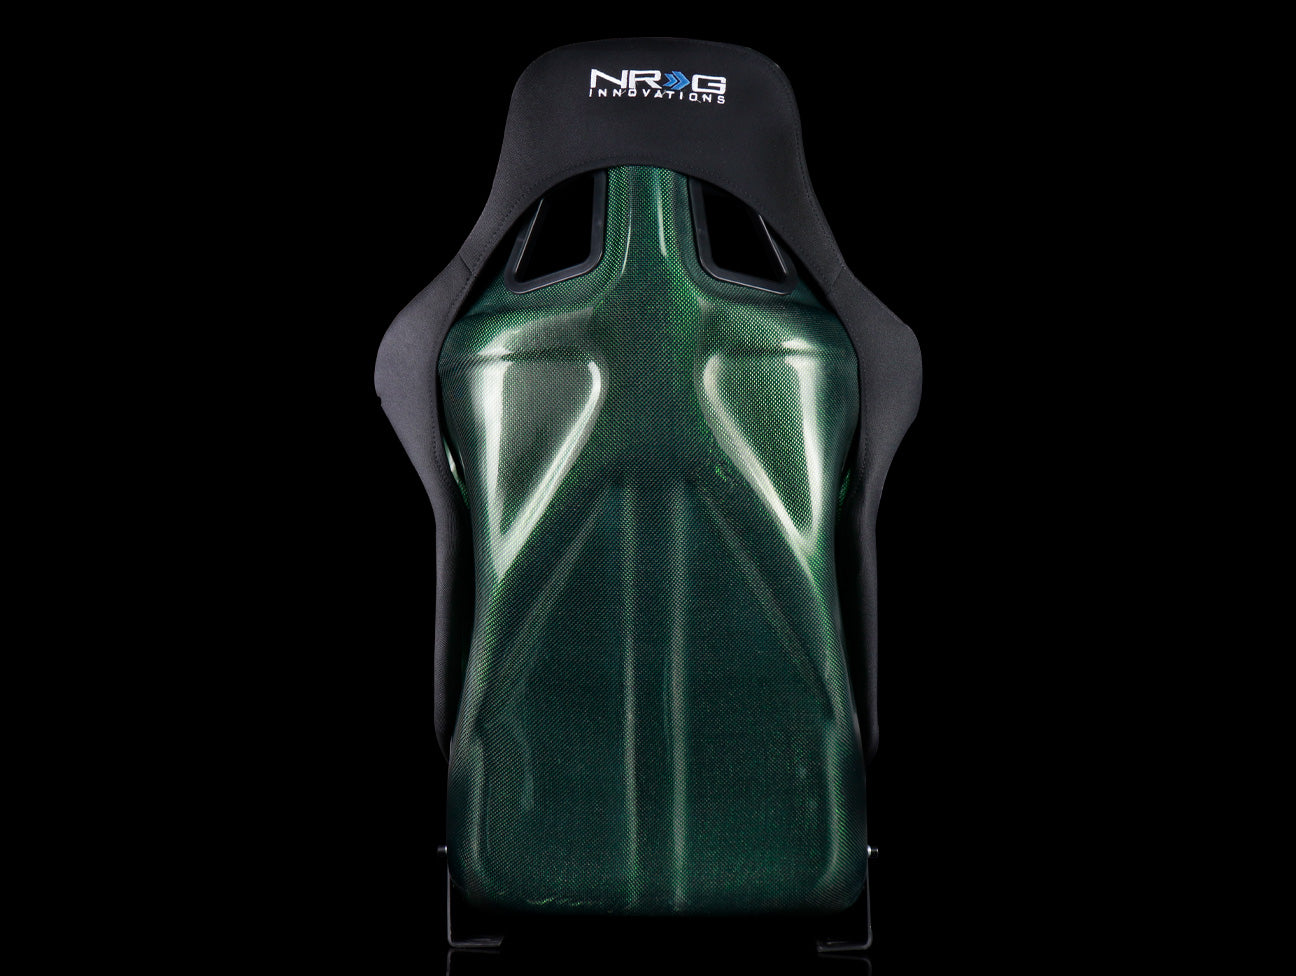 SSC01 - Charge Speed Bucket Racing Seat Spiritz SS Type Carbon Black